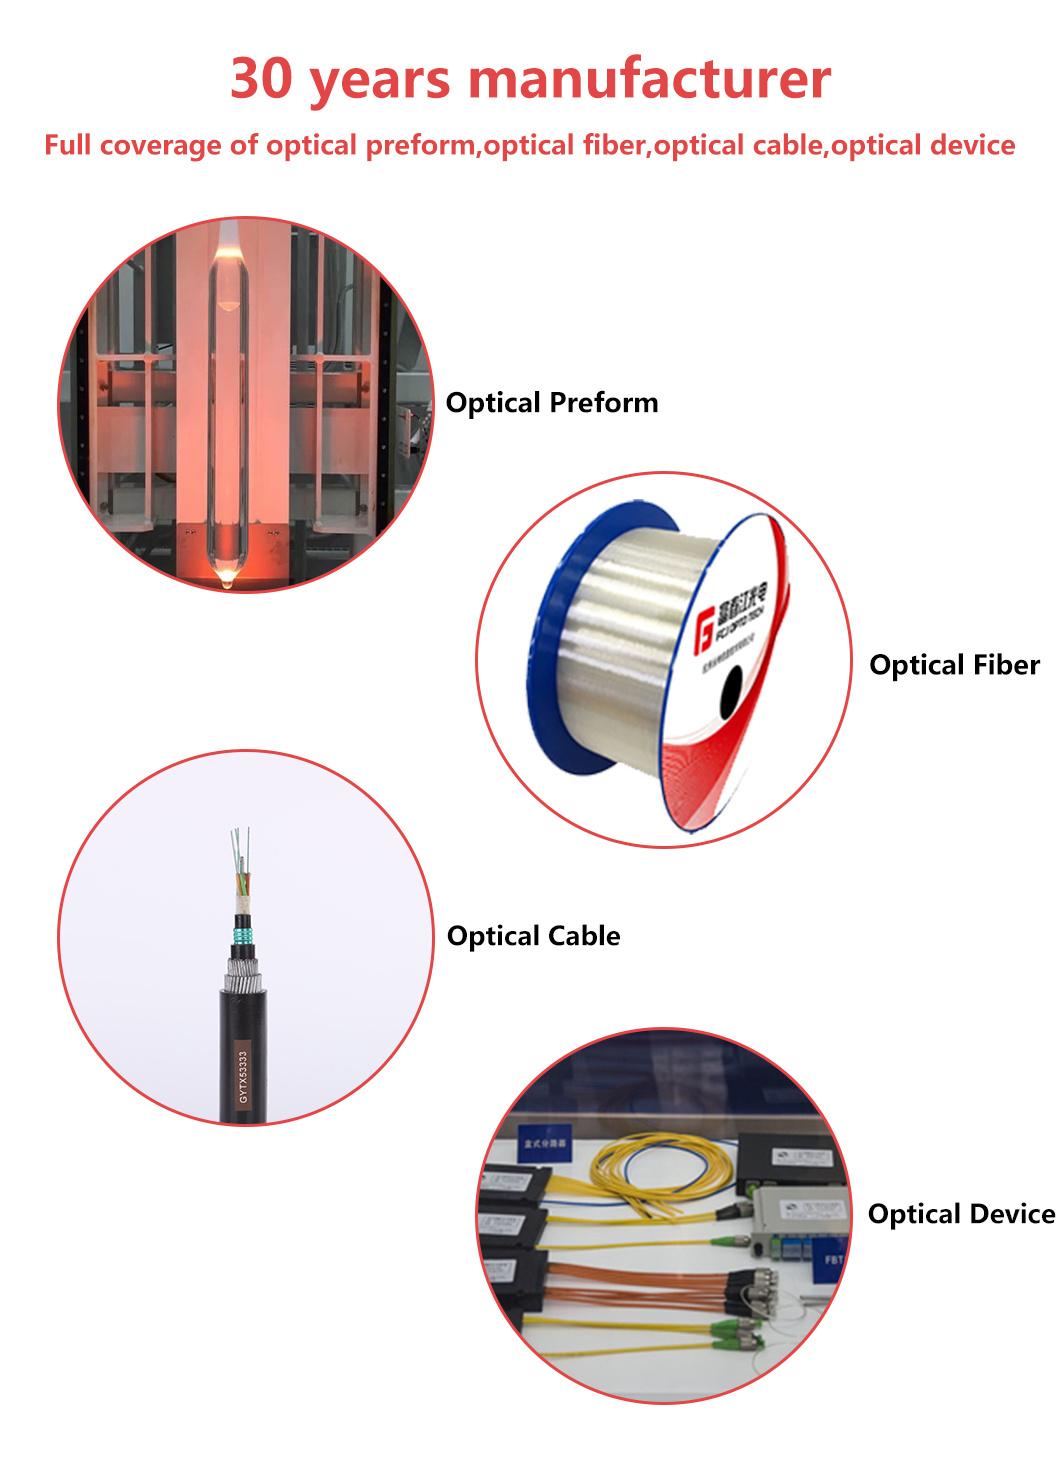 China Manufacture Anatel Certificate 6 12 24 Core Fibra Optica Drop Cable Gyffy Fiber Optic Cable